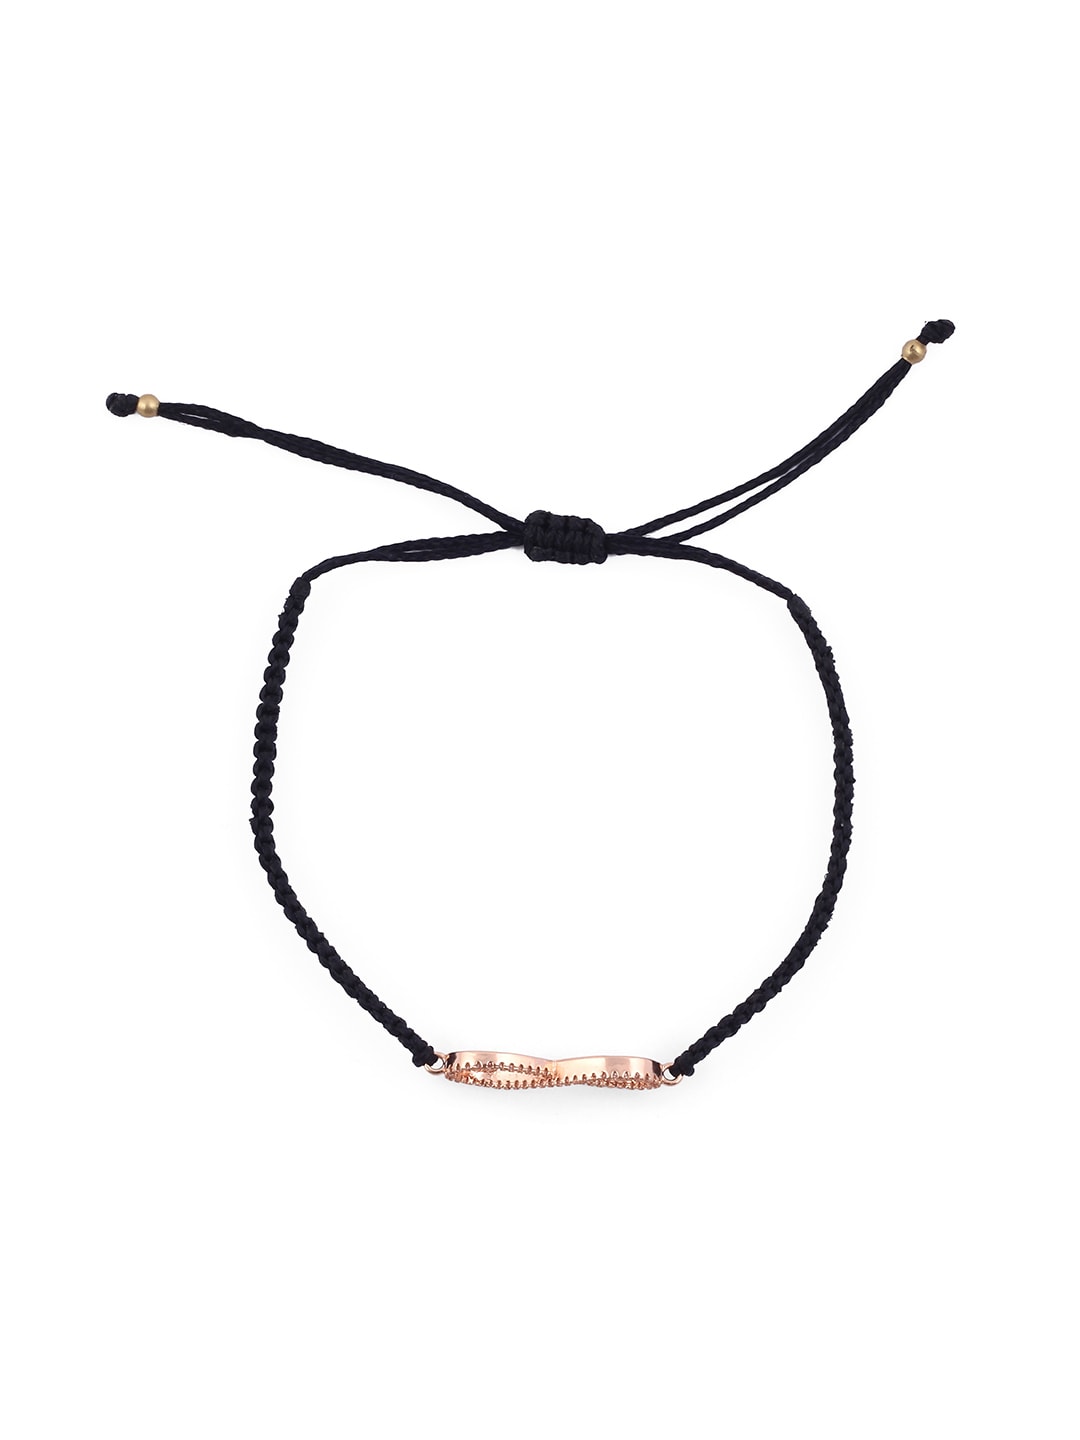 EL REGALO Women Rose Gold-Toned & Black Infinity Symbol Wraparound Bracelet - for Women and Girls
Style ID: 17147902